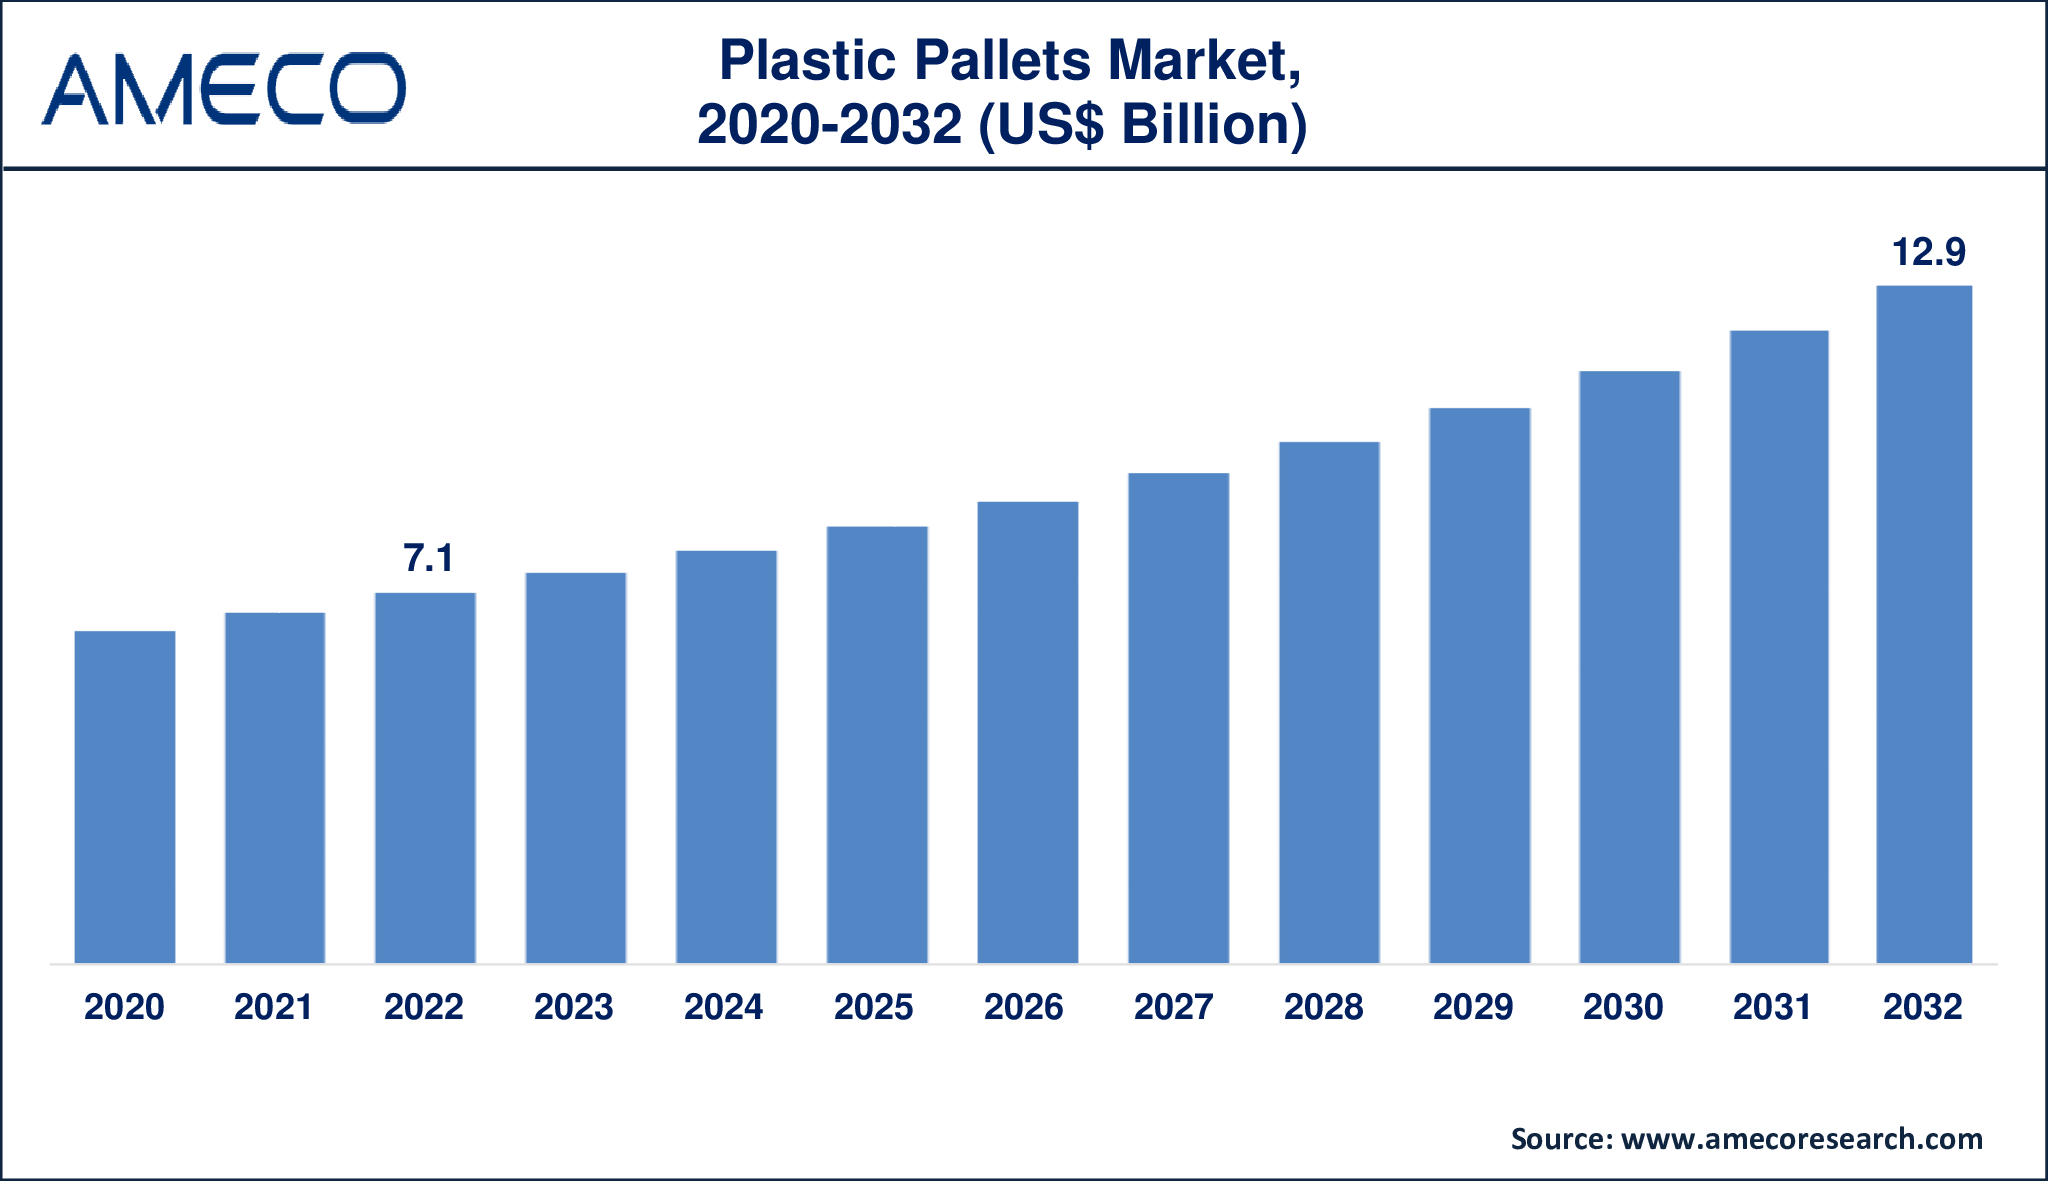 Plastic Pallets Market Dynamics